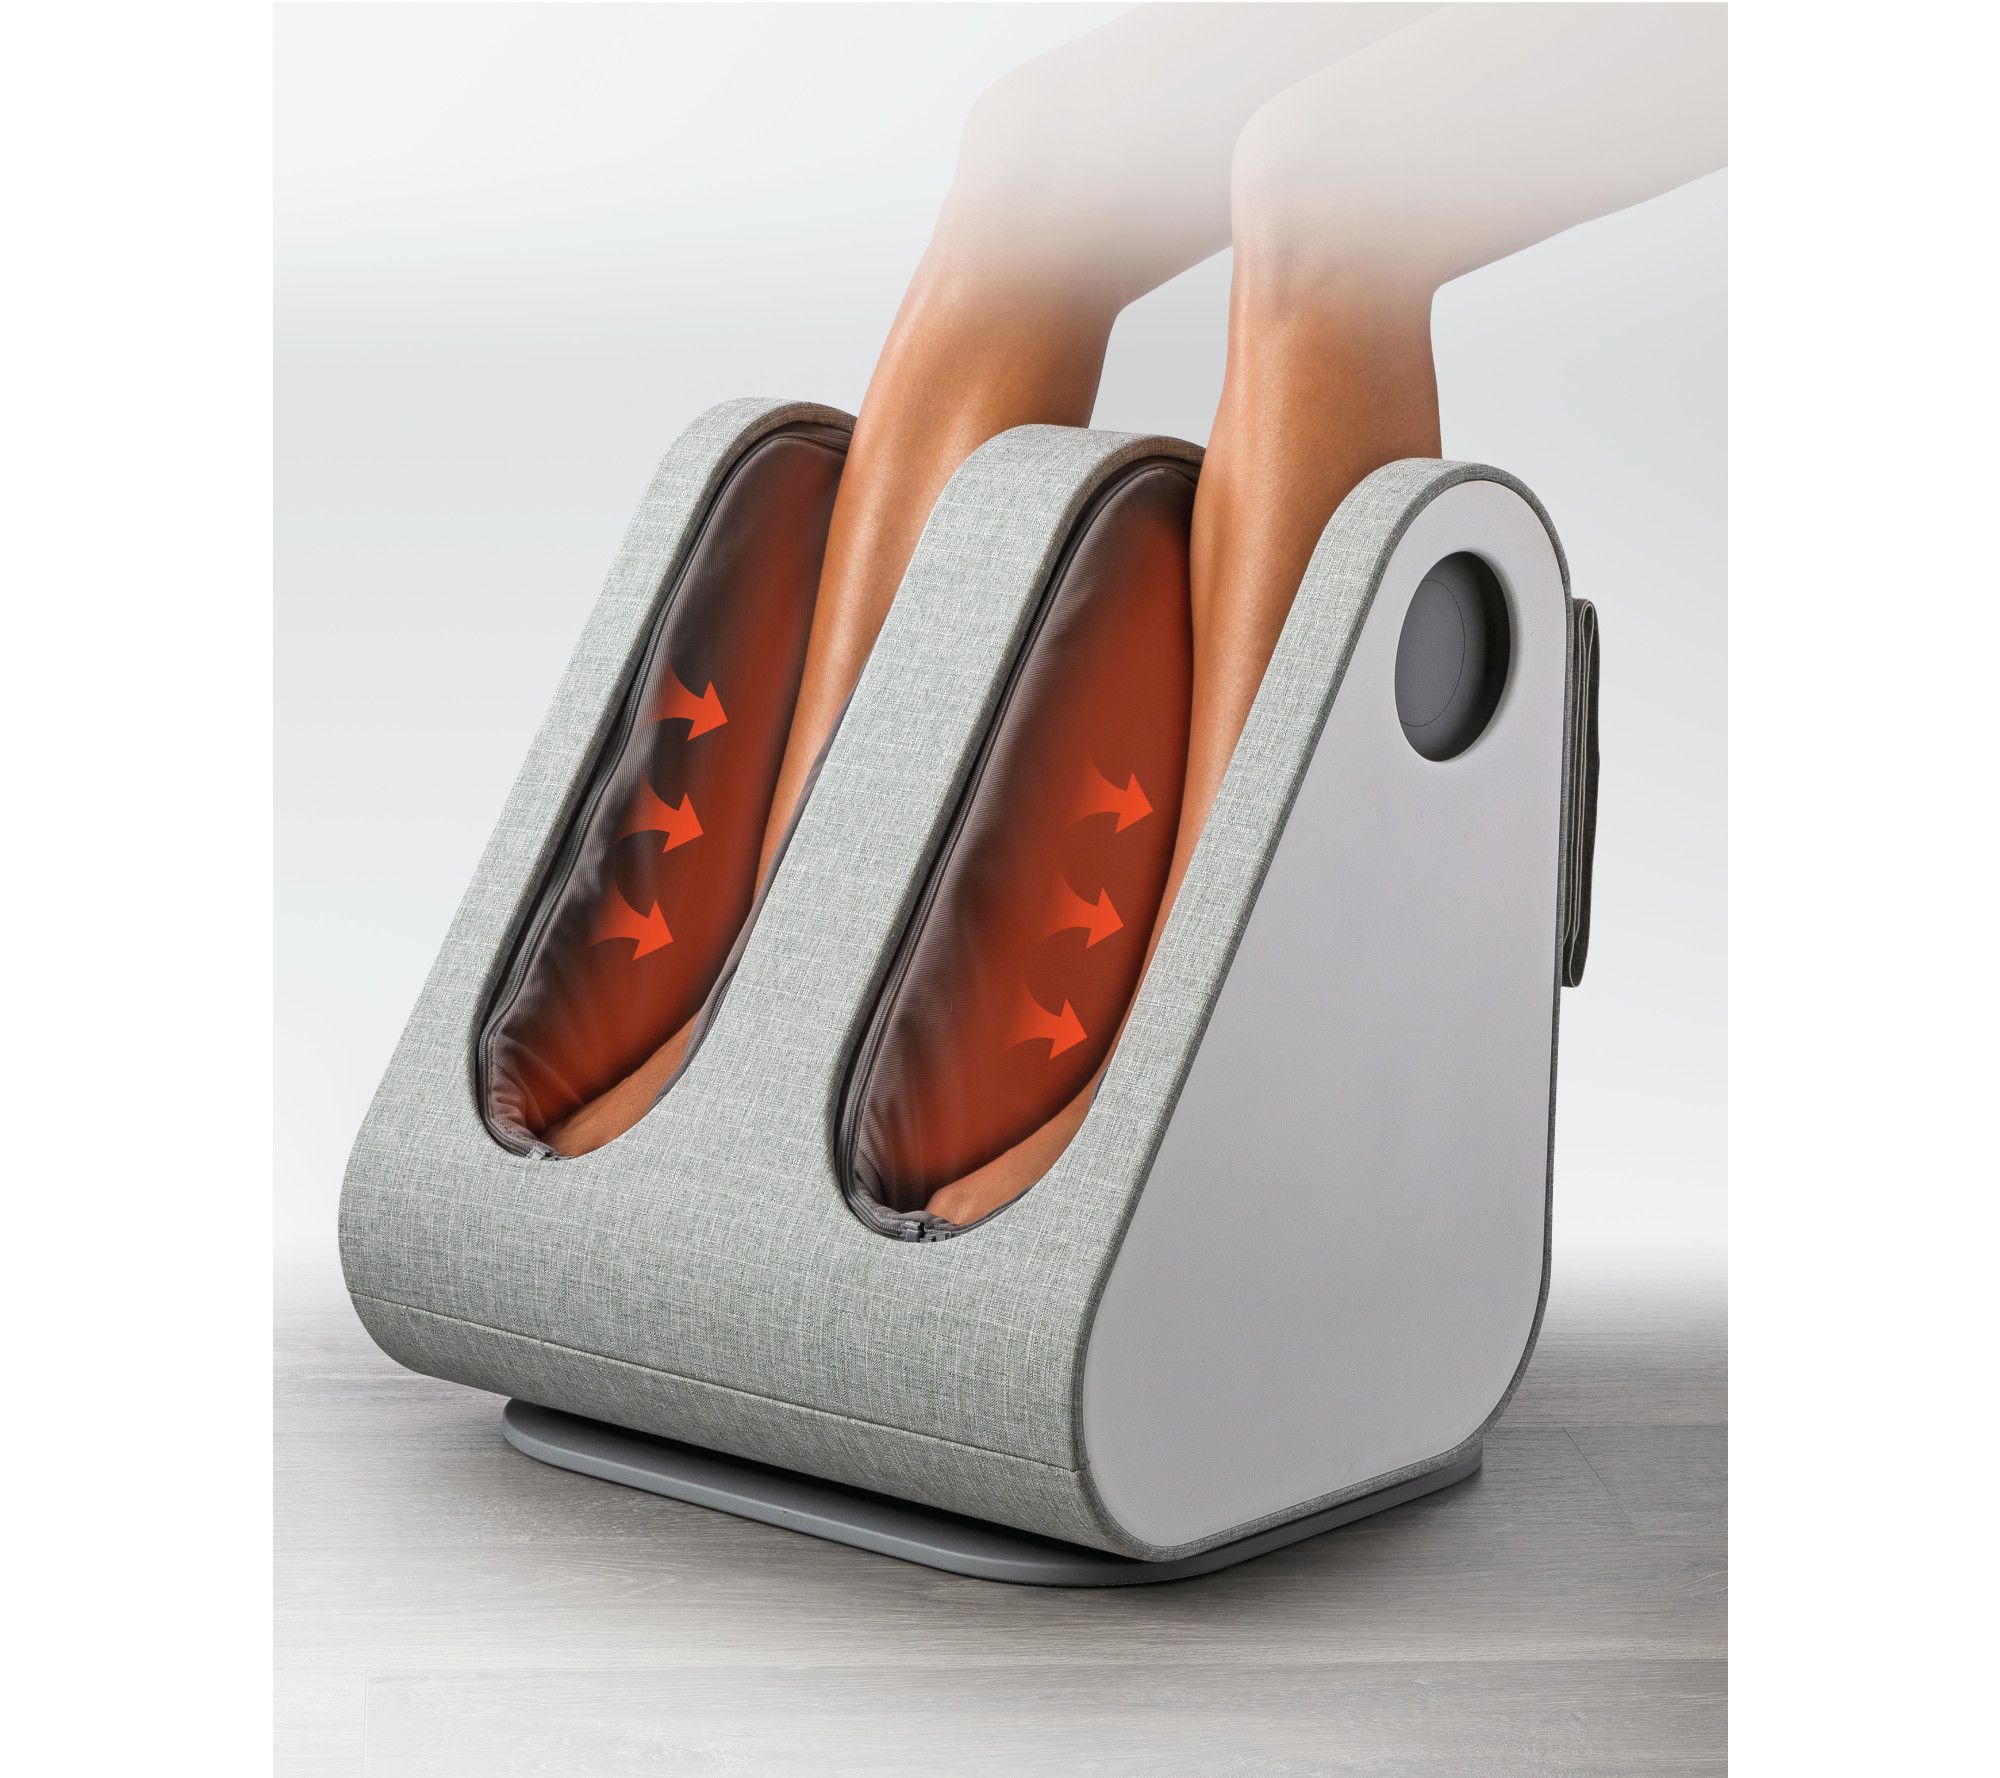 Sharper Image Massager Seat Topper 4-Node Shiatsu with Heat and